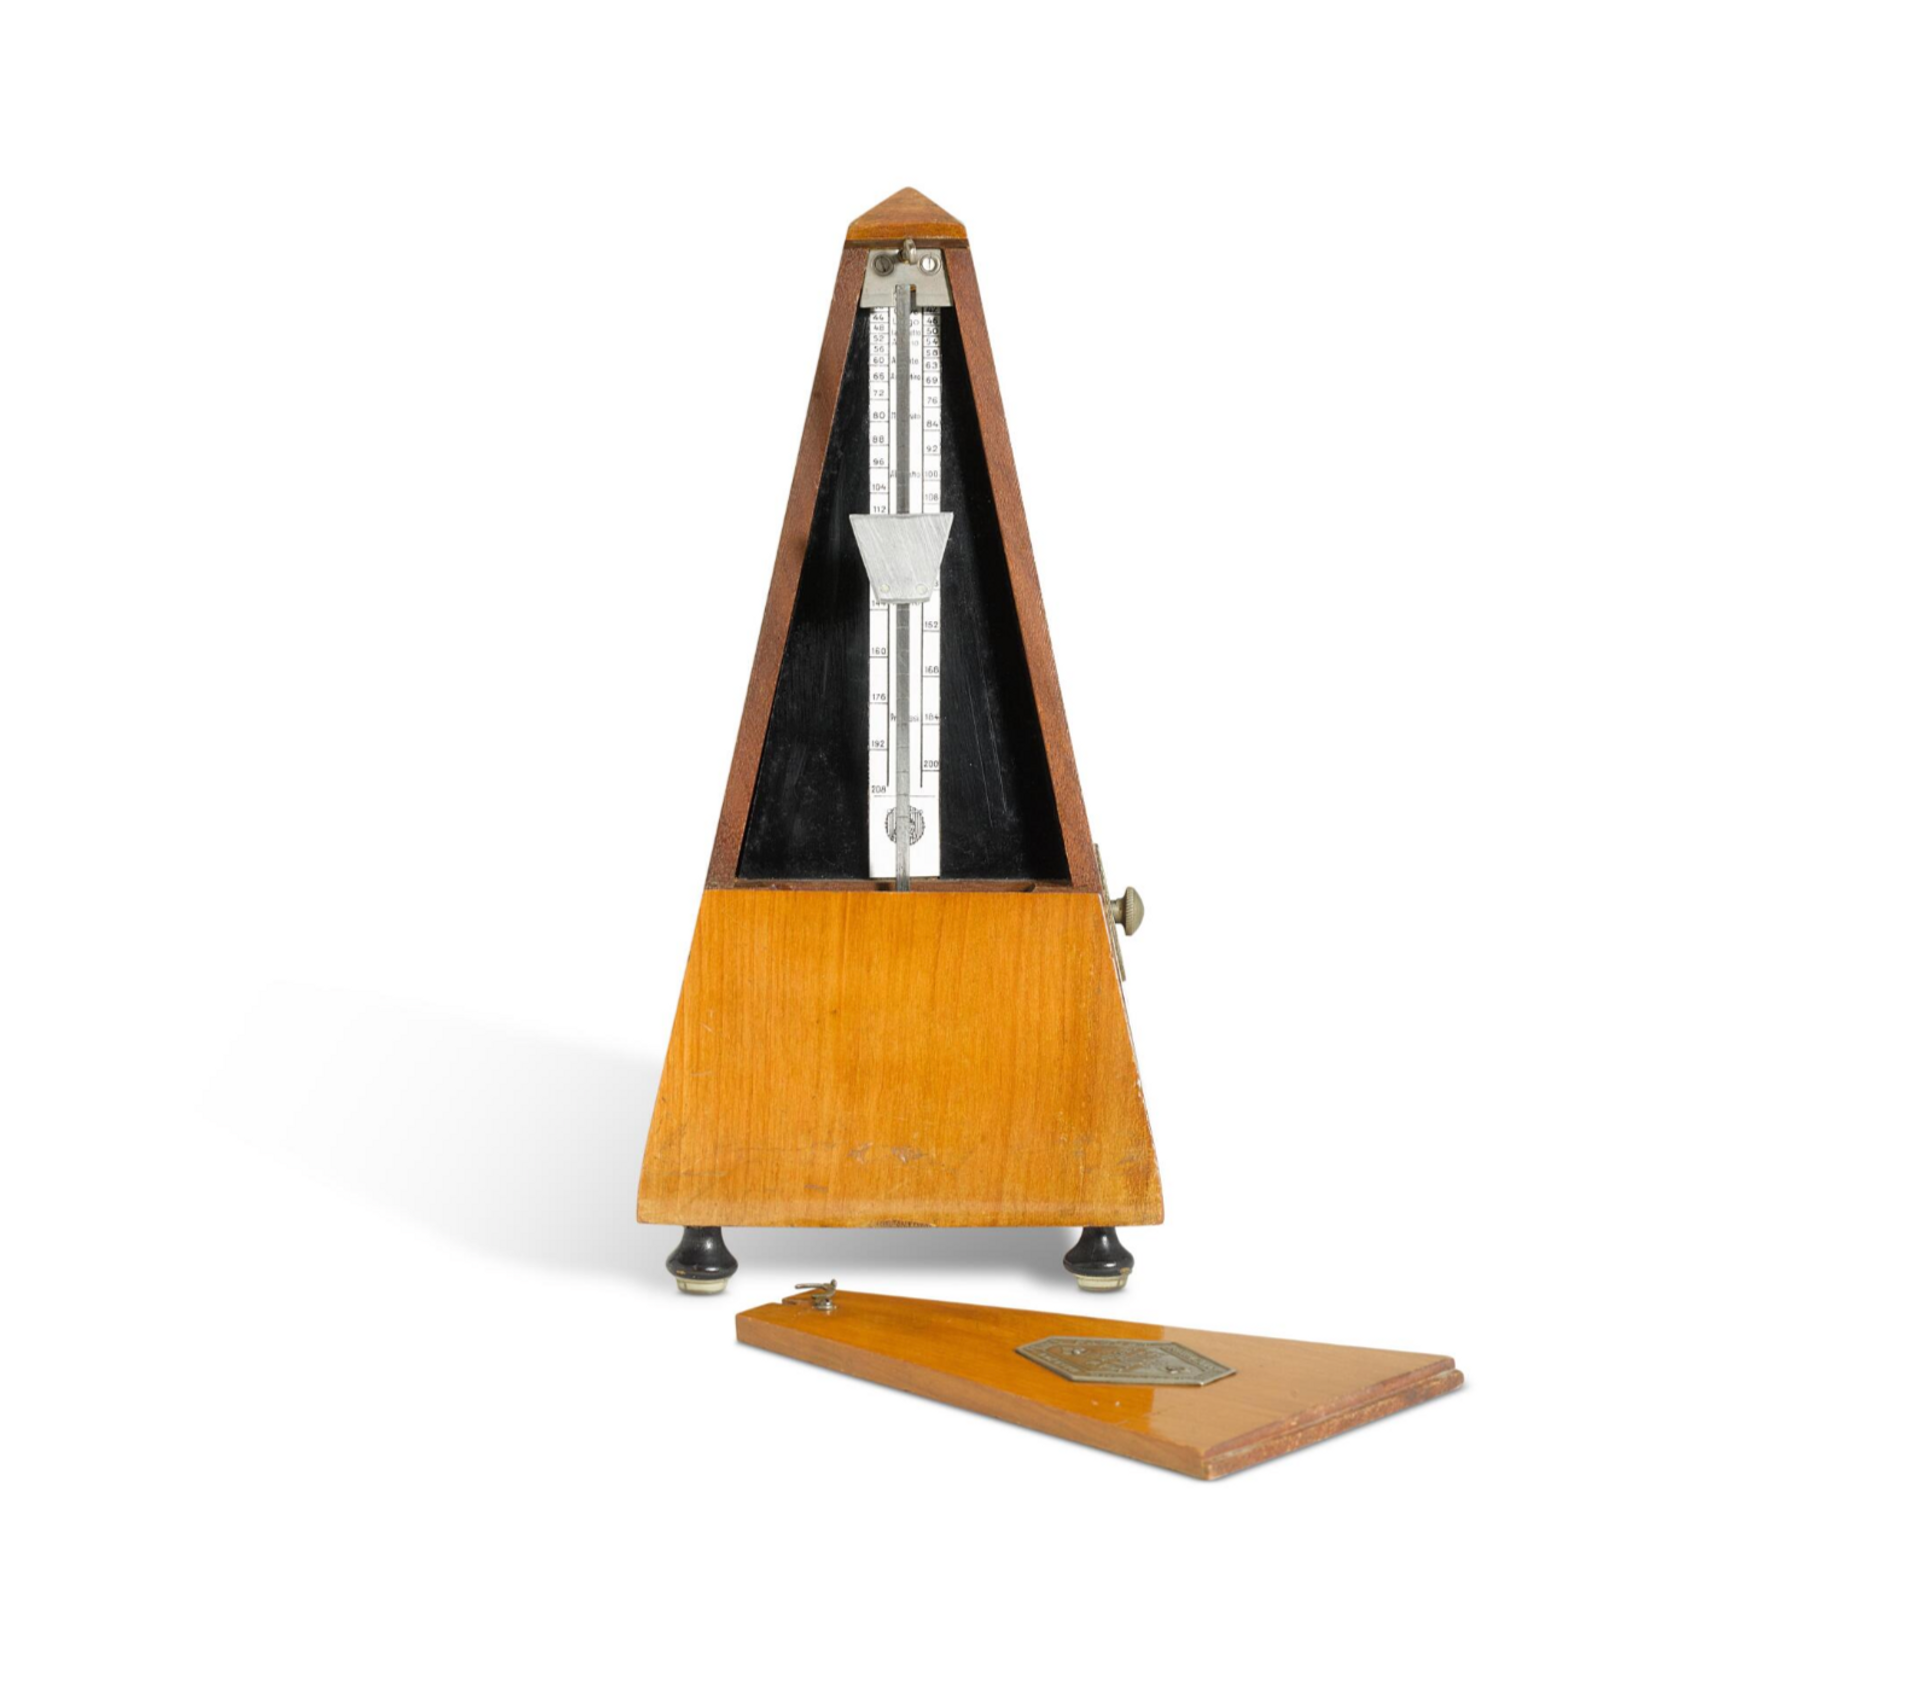 A walnut metronome, owned by Freddie Mercury.